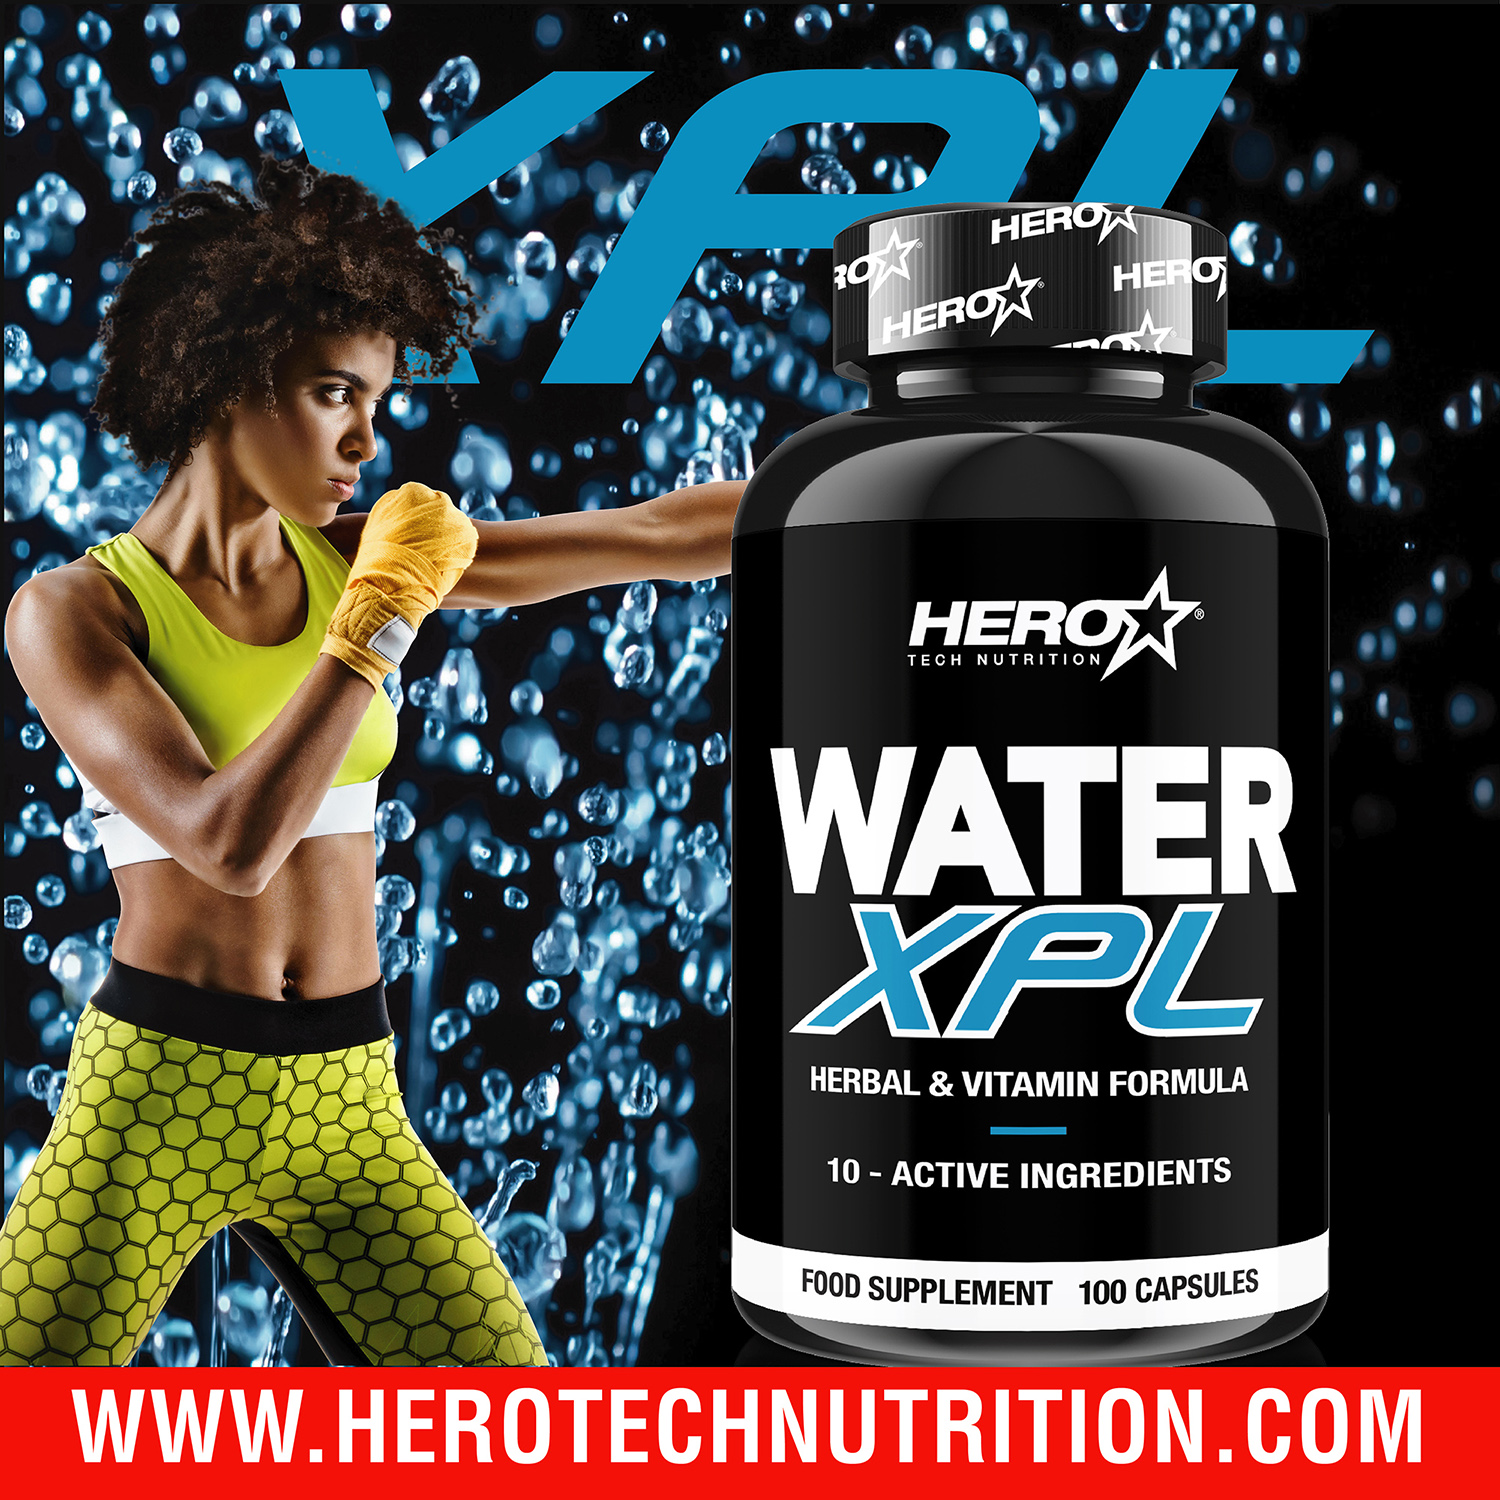 WATER XPL HERO TECH NUTRITION draining body fluid - herotechnutrition